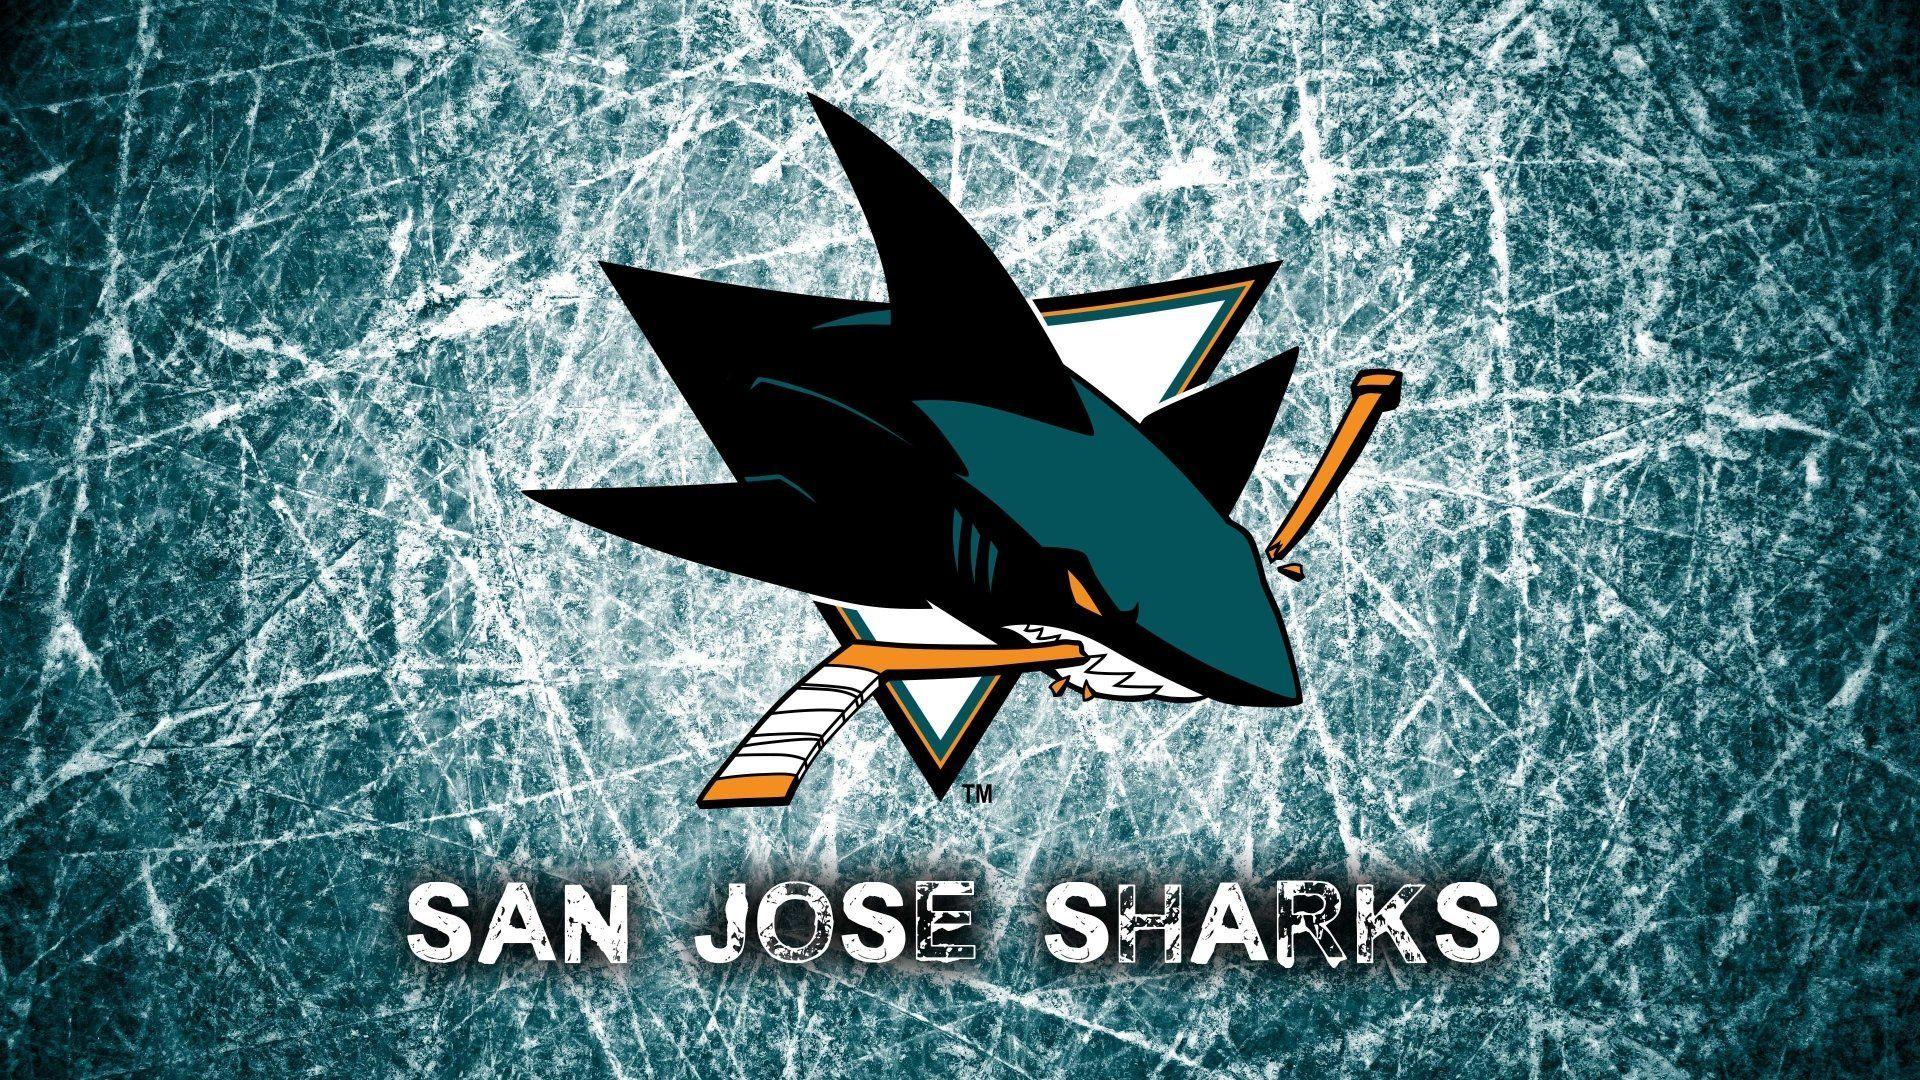 San Jose Sharks on X: We find your lack of wallpaper disturbing